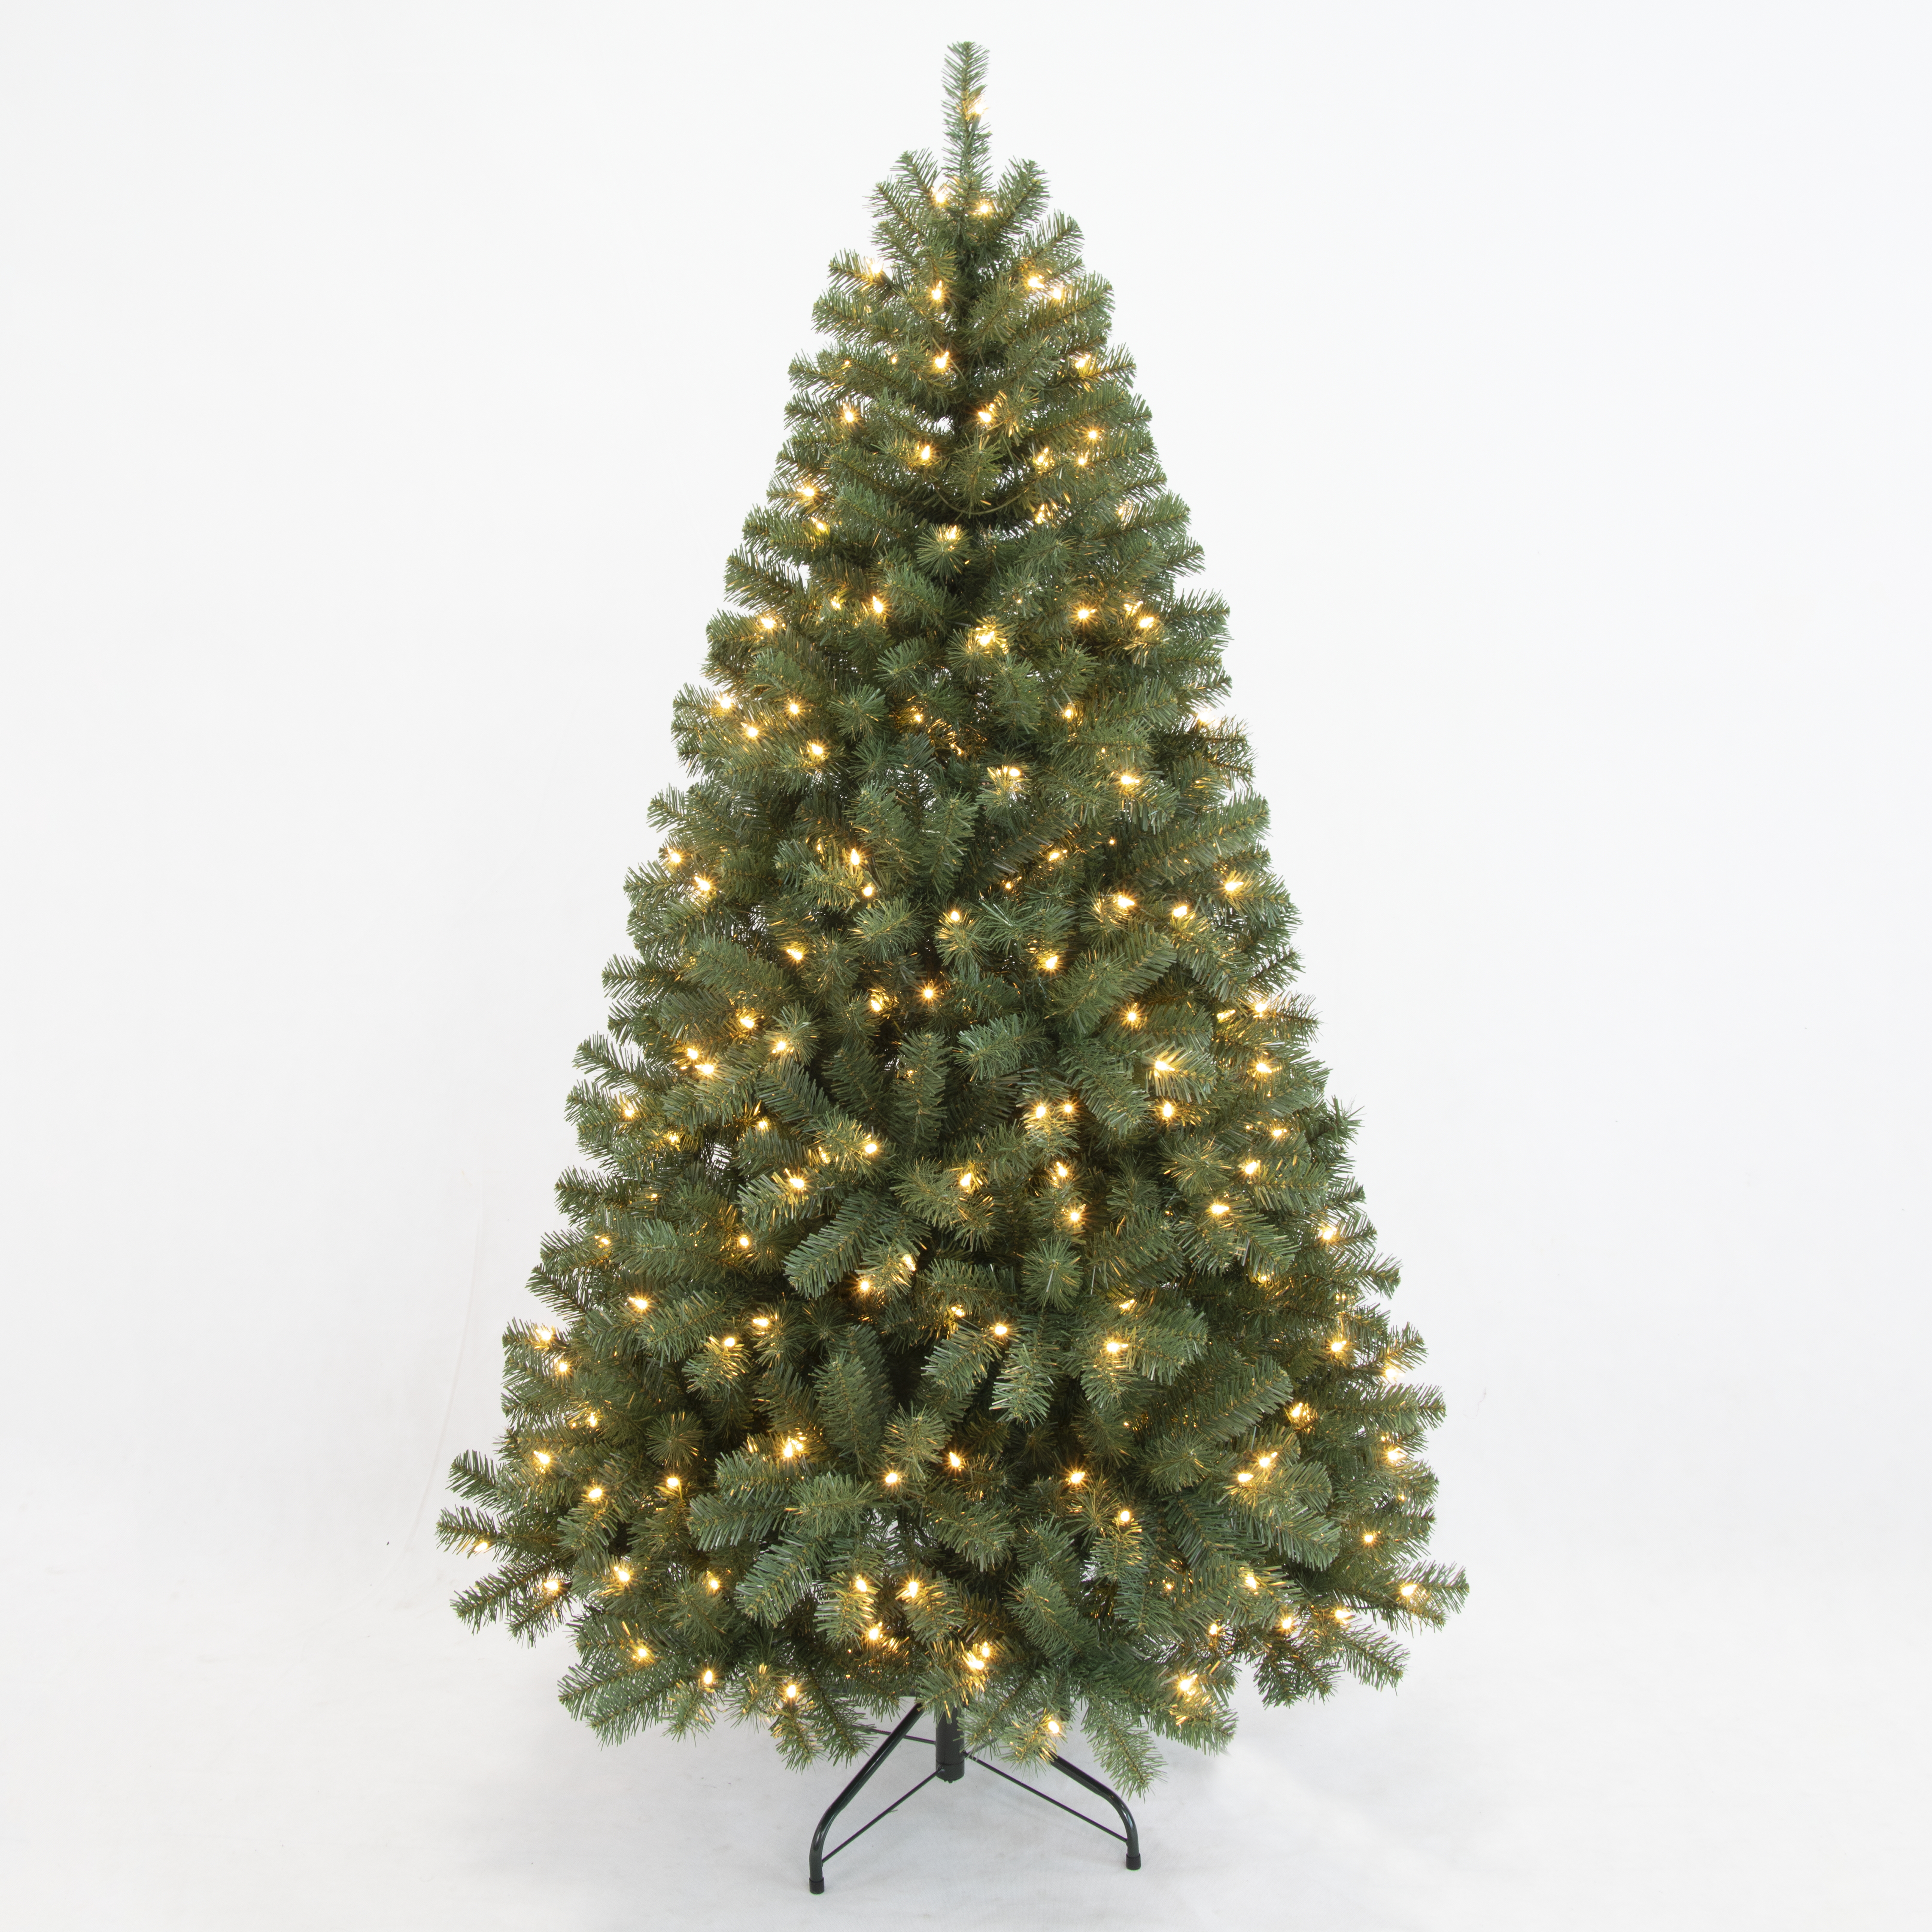 PINEFIELDS Prelit Christmas Tree 6FT, Artificial Christmas Tree with Lights, Lighted Xmas Tree, Classic Christmas Tree, 300 UL Clear Lights, PVC, Hinge, Metal Base